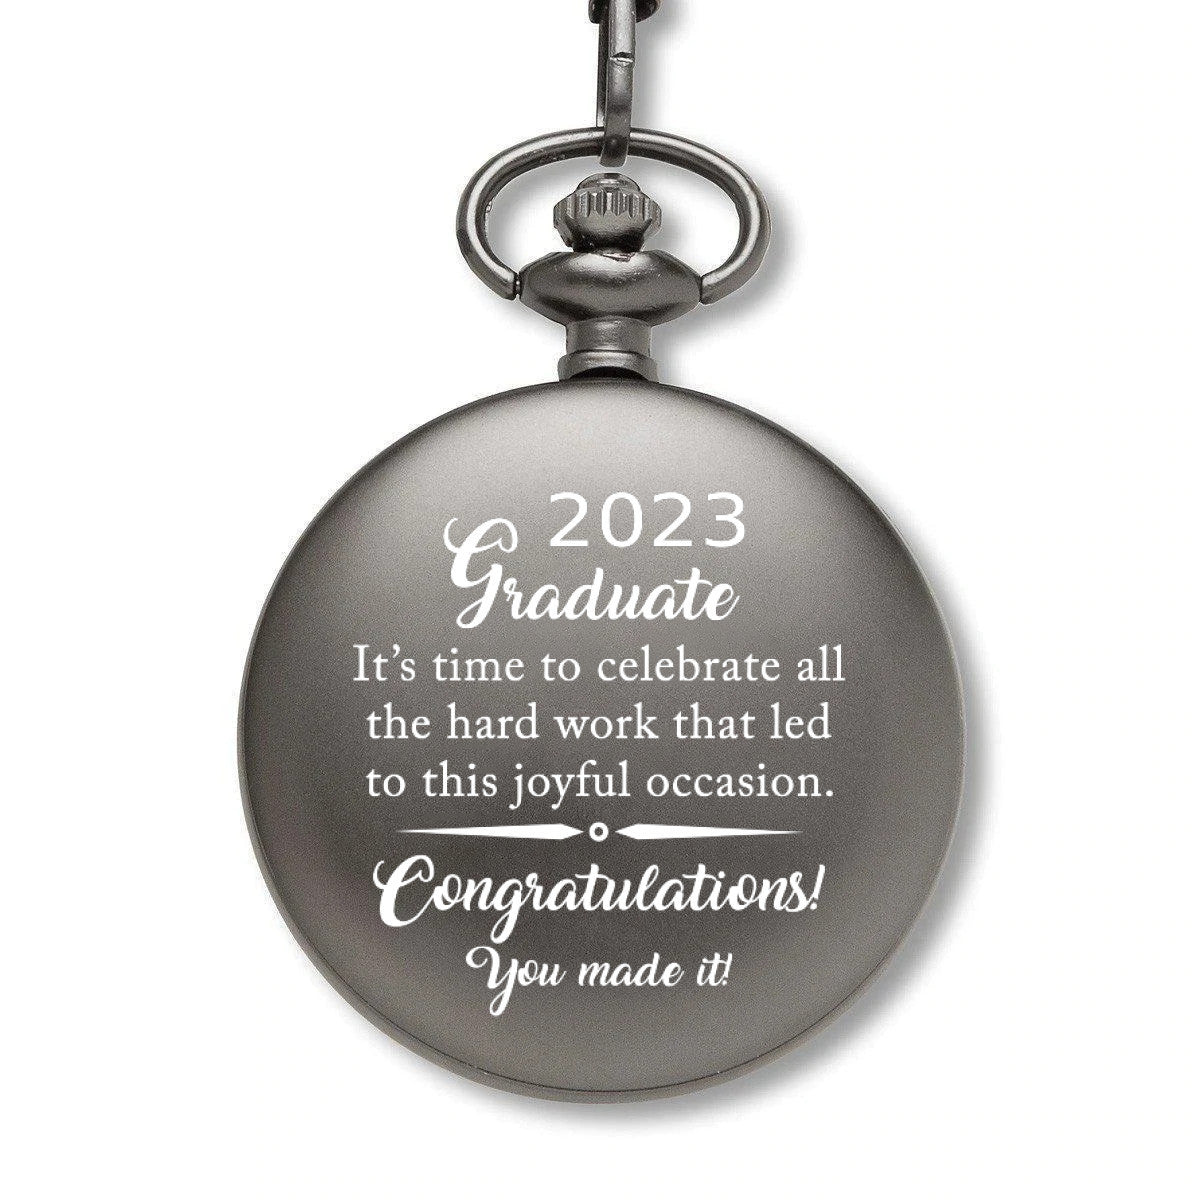 Graduate 2023 You Made It Pocket Watch